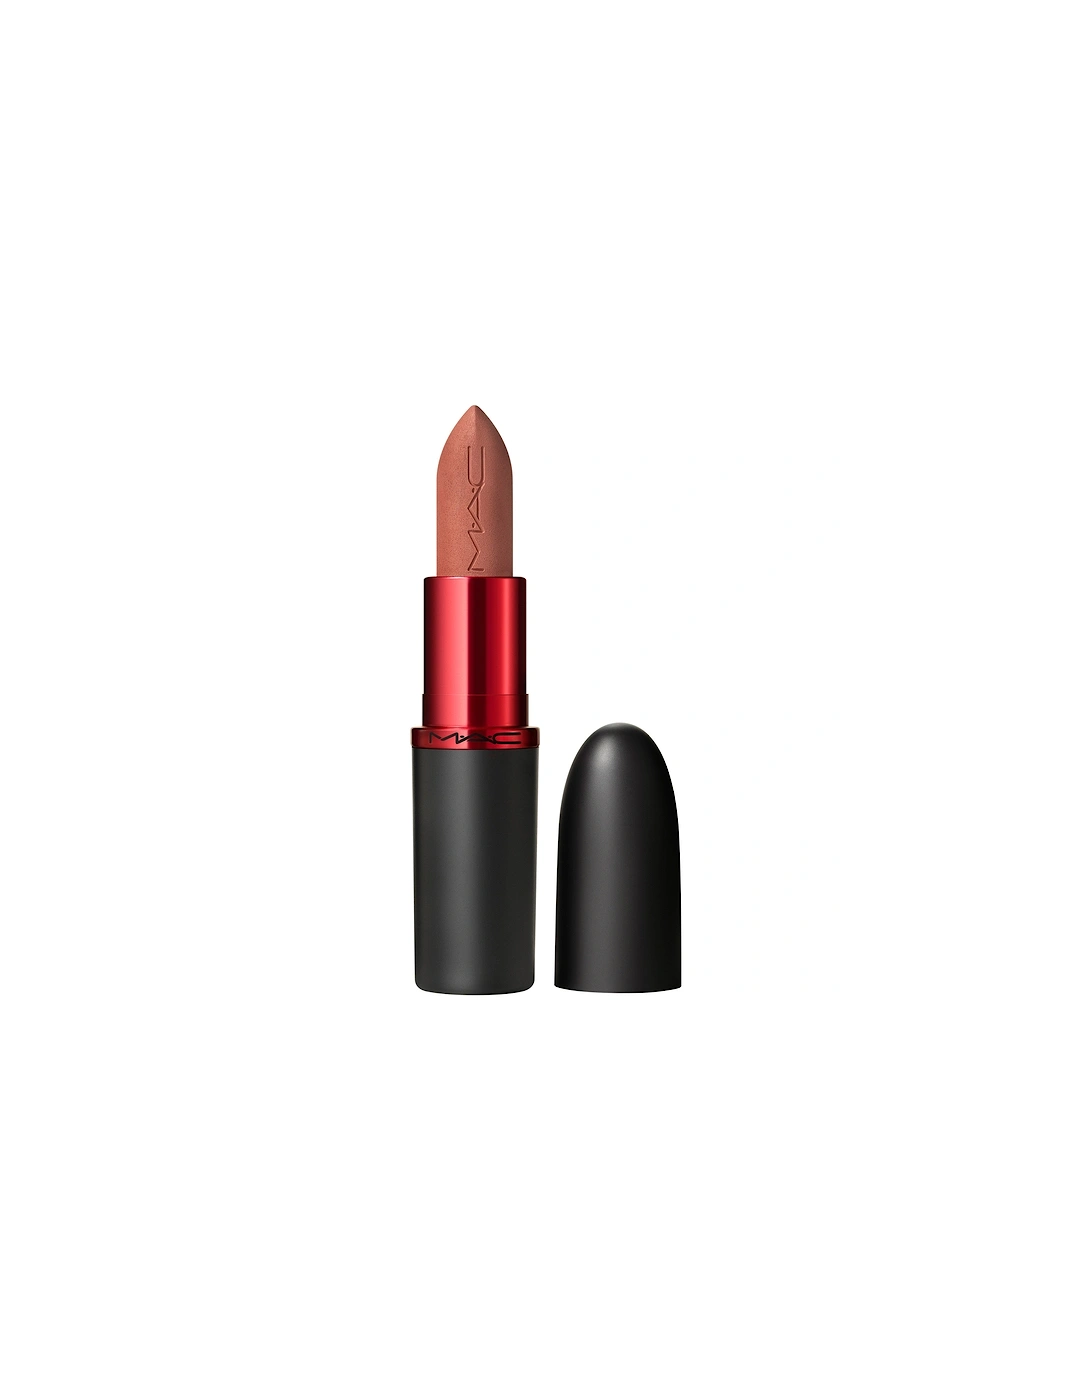 Macximal Matte Viva Glam Lipstick - Viva Empowered, 2 of 1